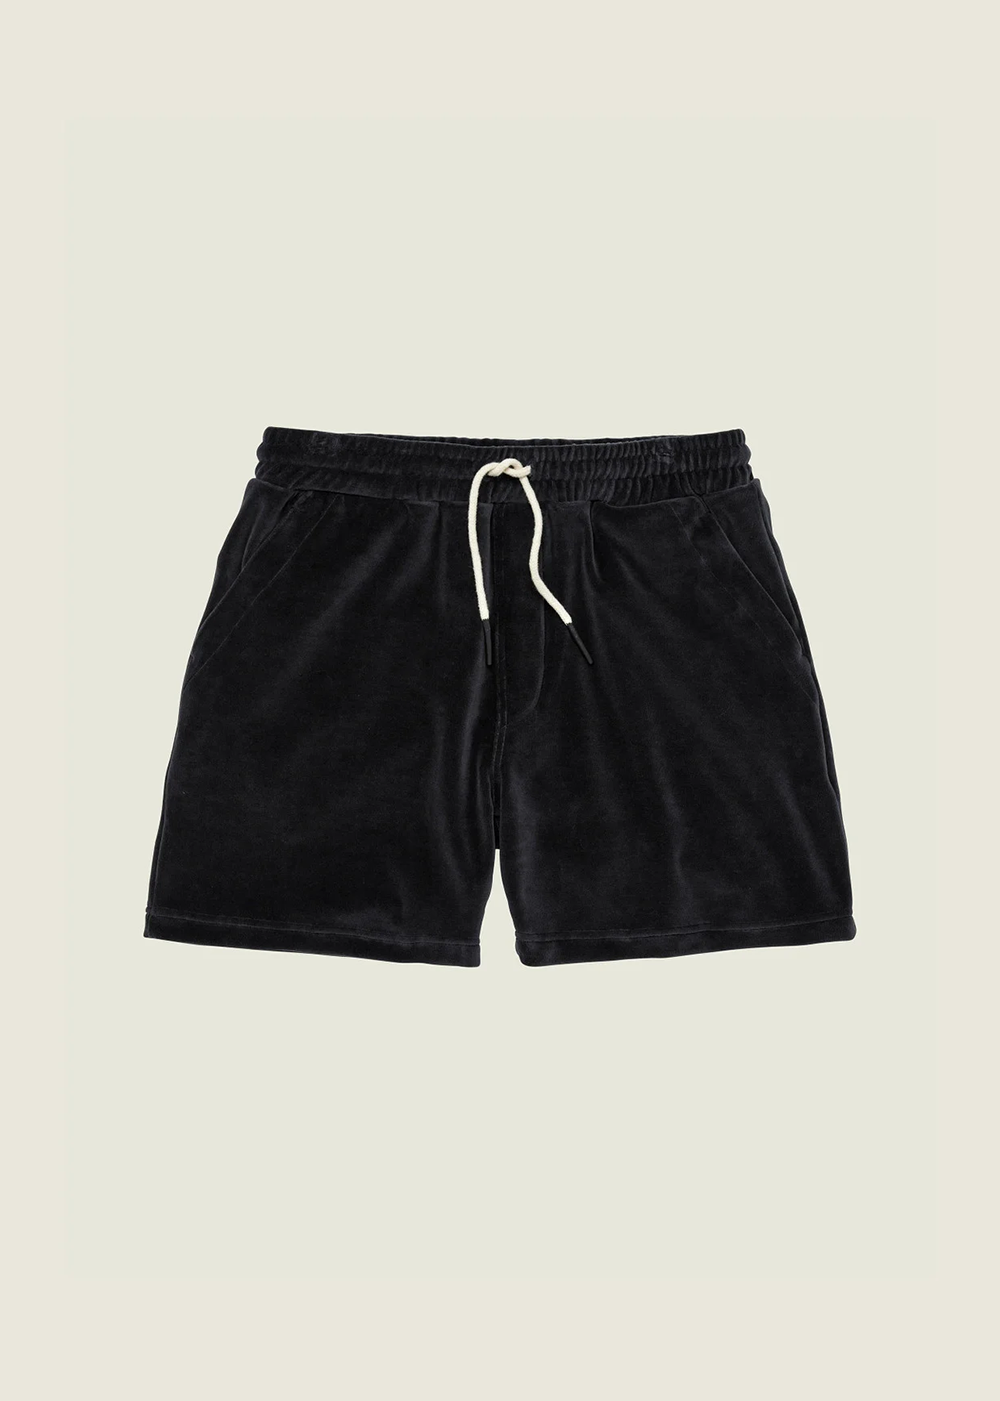 Black Velour Shorts - OAS Company - Danali